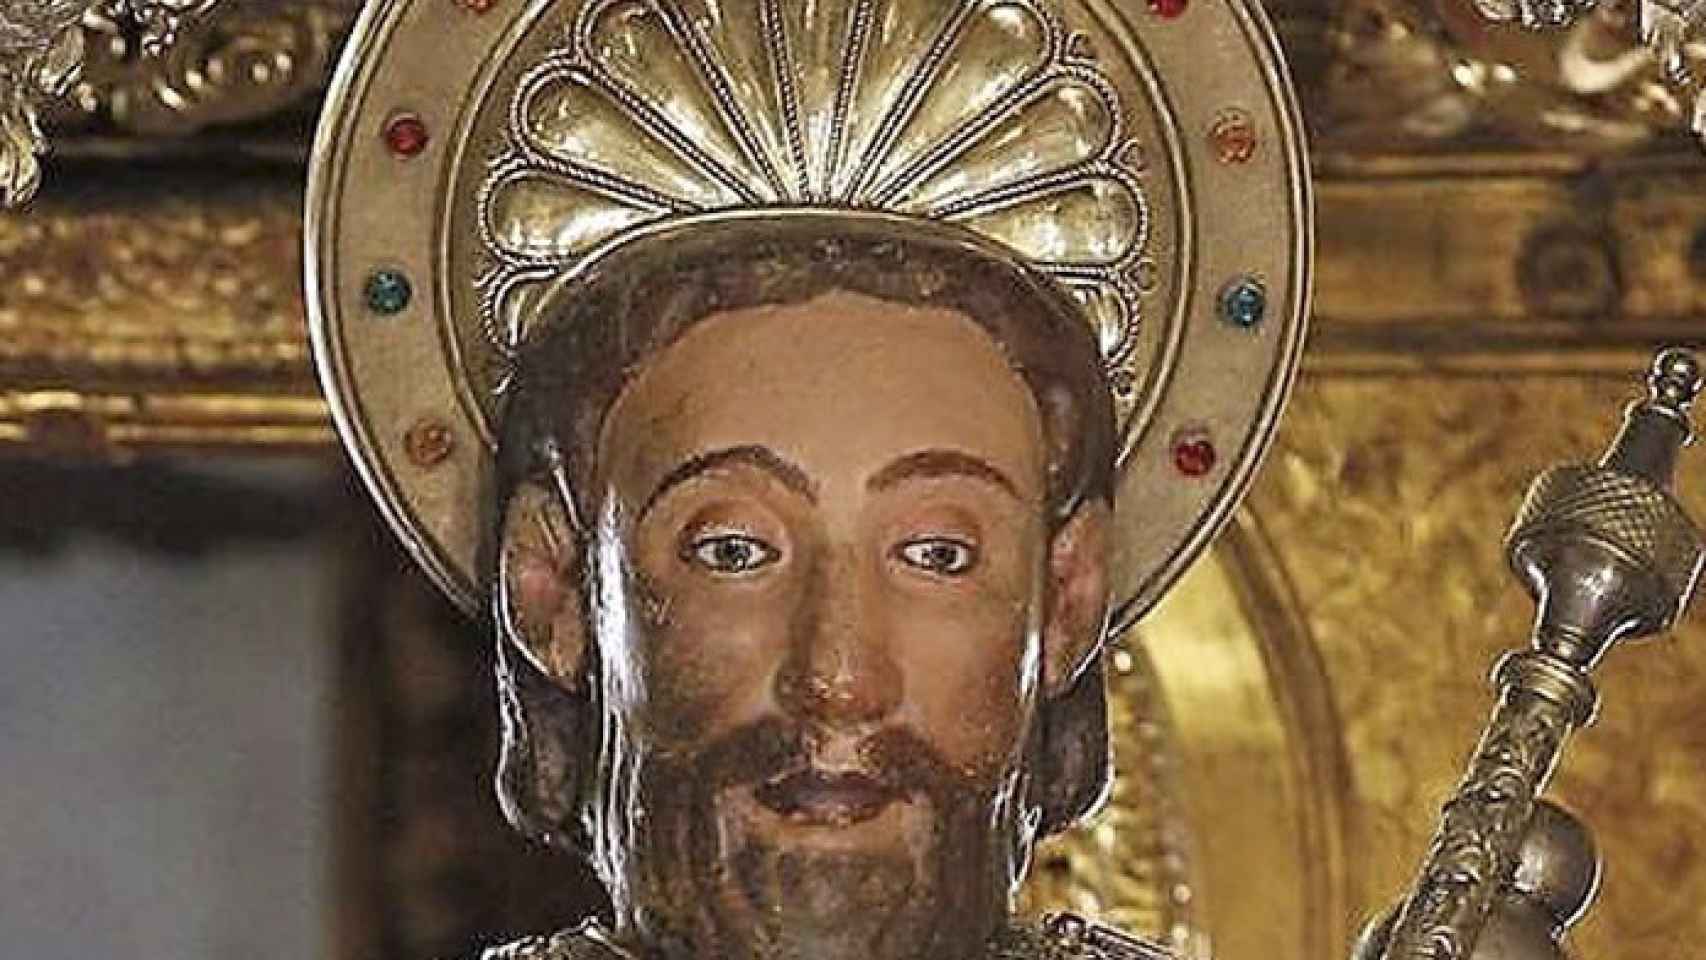 Leon-univerisidad-apostol-catedra